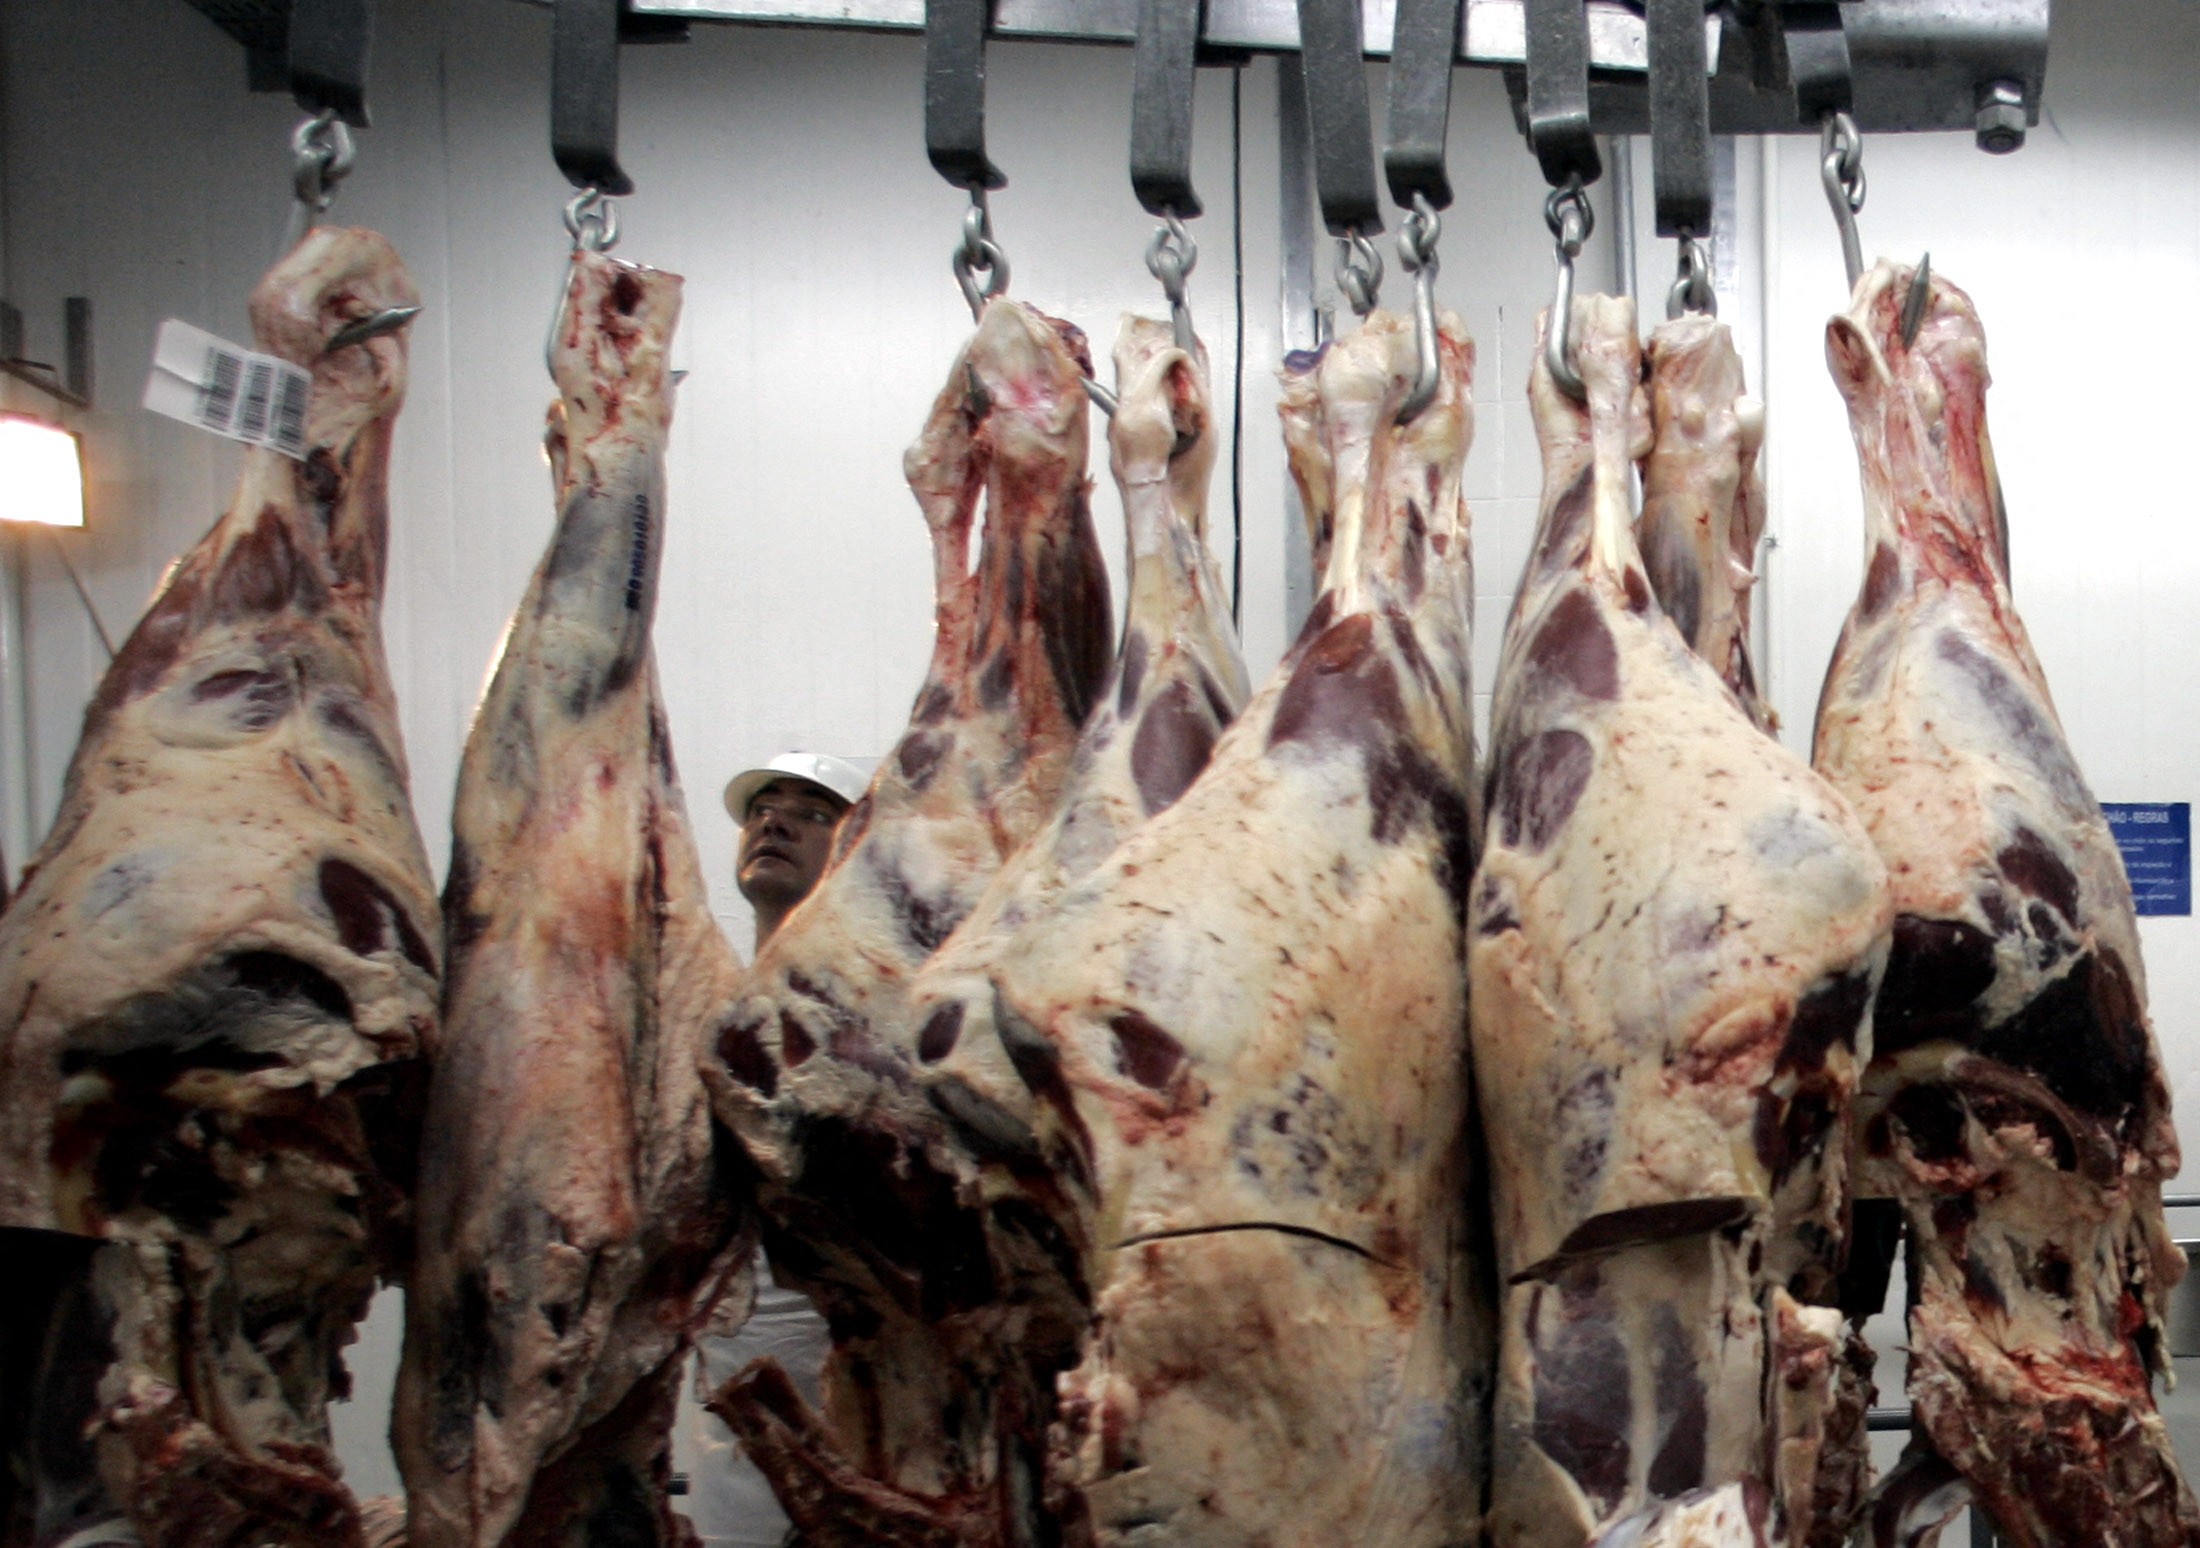 Frigorífico de carne bovina da JBS (Foto: REUTERS/Paulo Whitaker (BRAZIL))